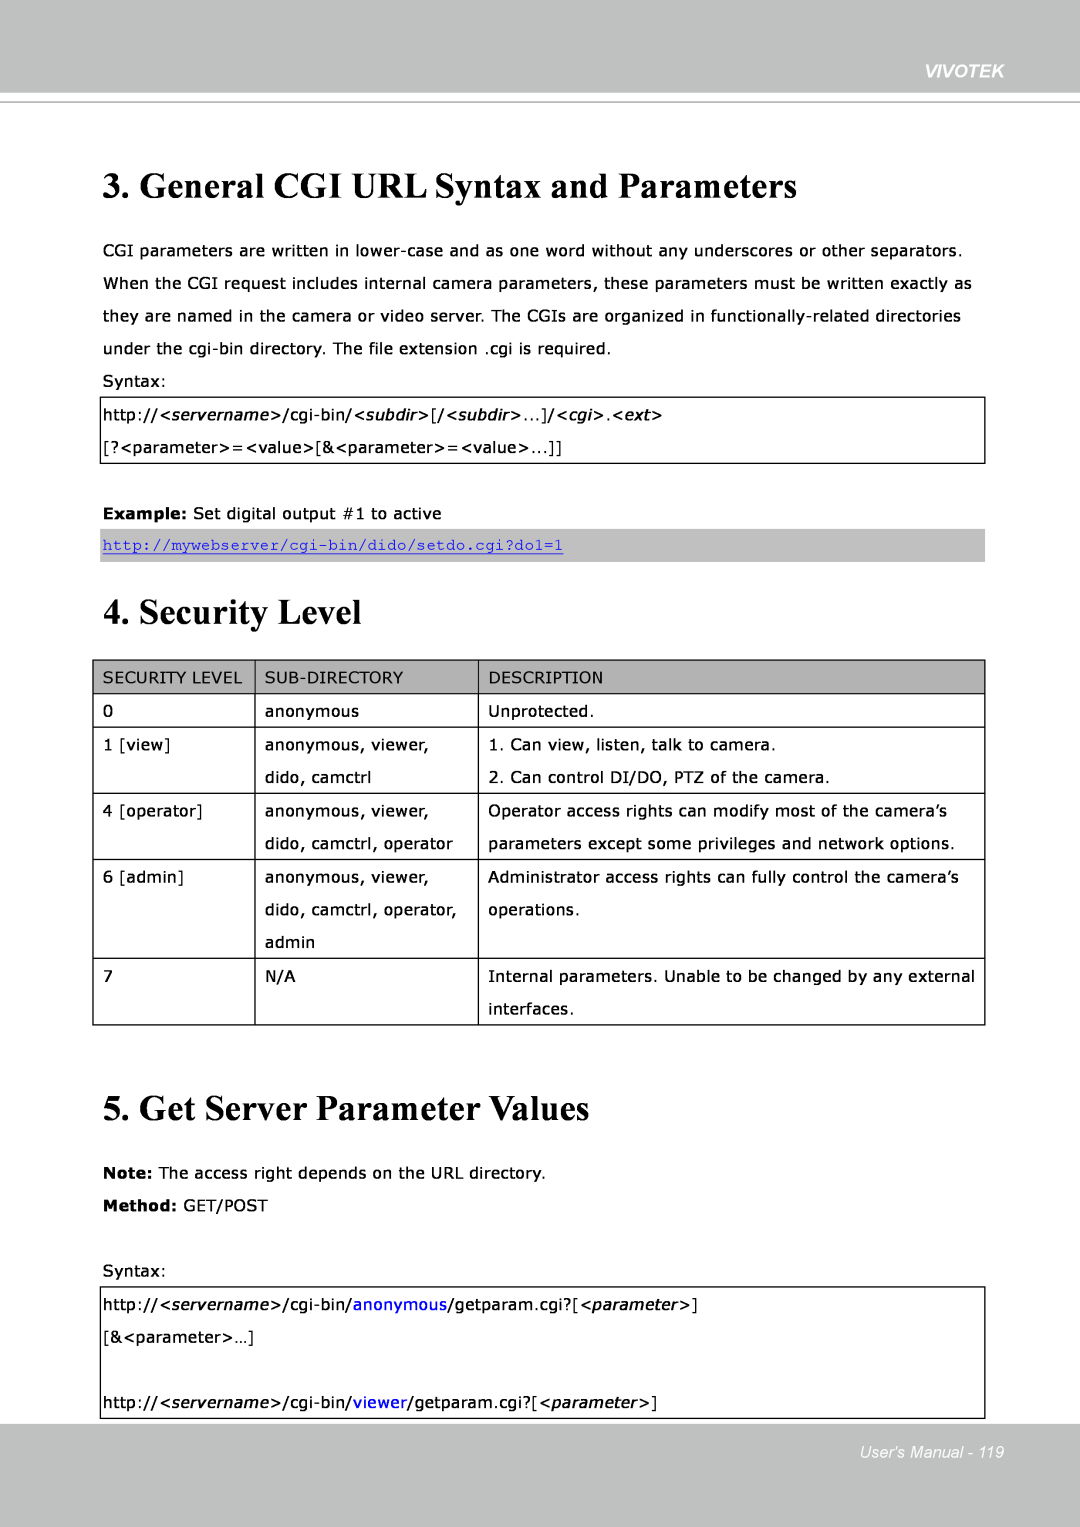 Vivotek FE8171V General CGI URL Syntax and Parameters, Security Level, Get Server Parameter Values, Vivotek, Users Manual 